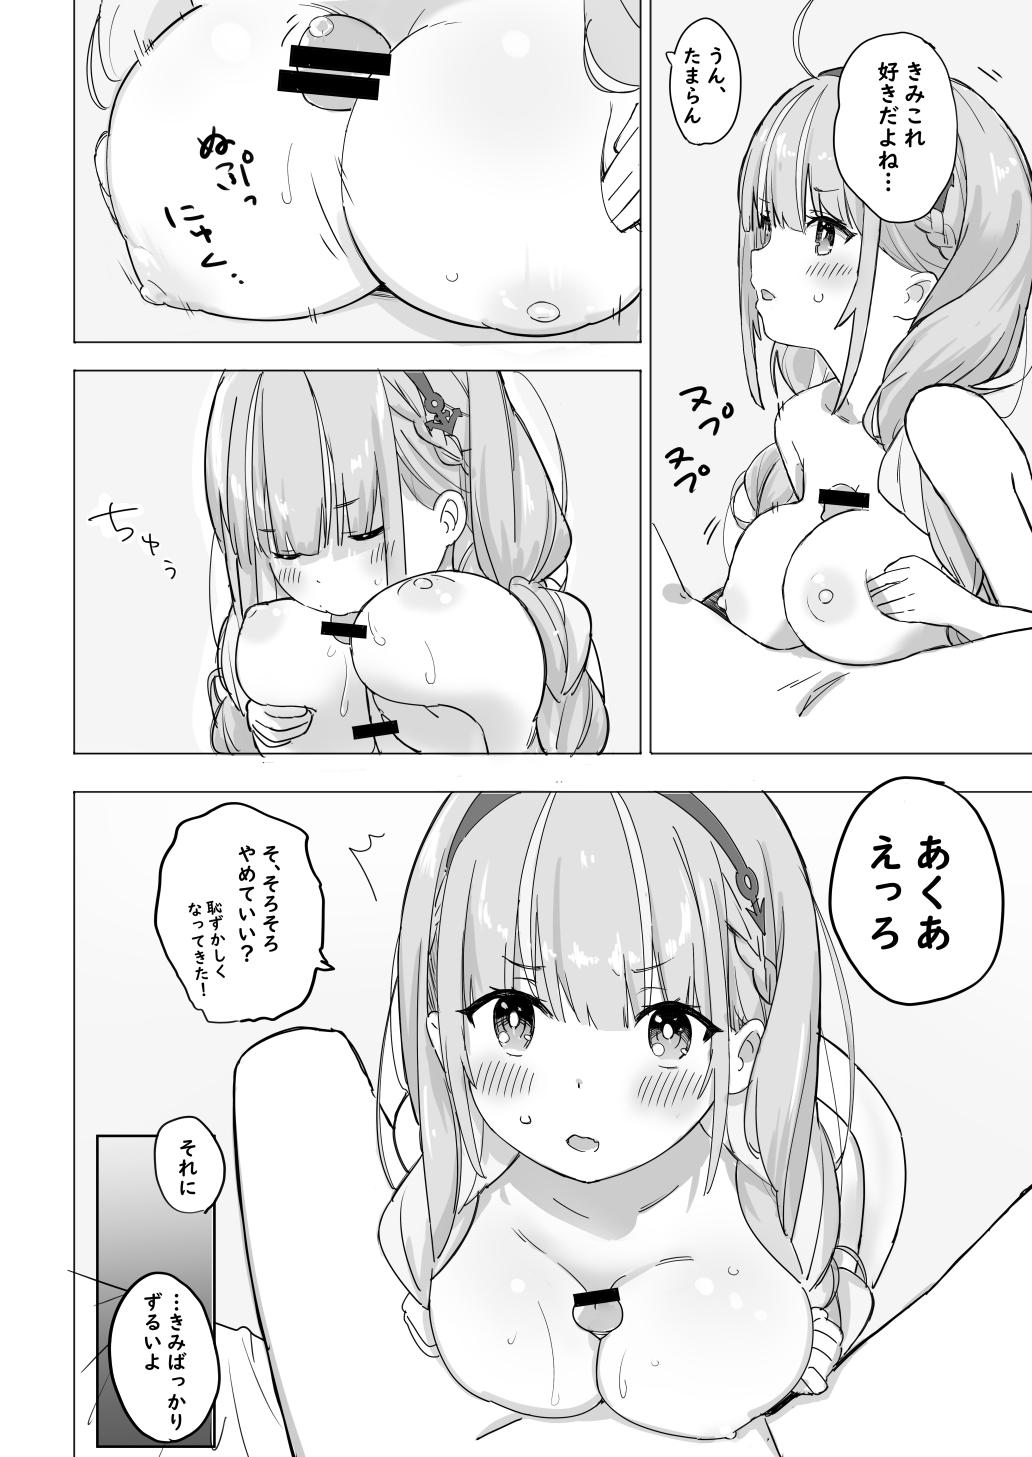 Upskirt Aqua to LoveHo ni Iku Manga - Hololive Skirt - Page 5